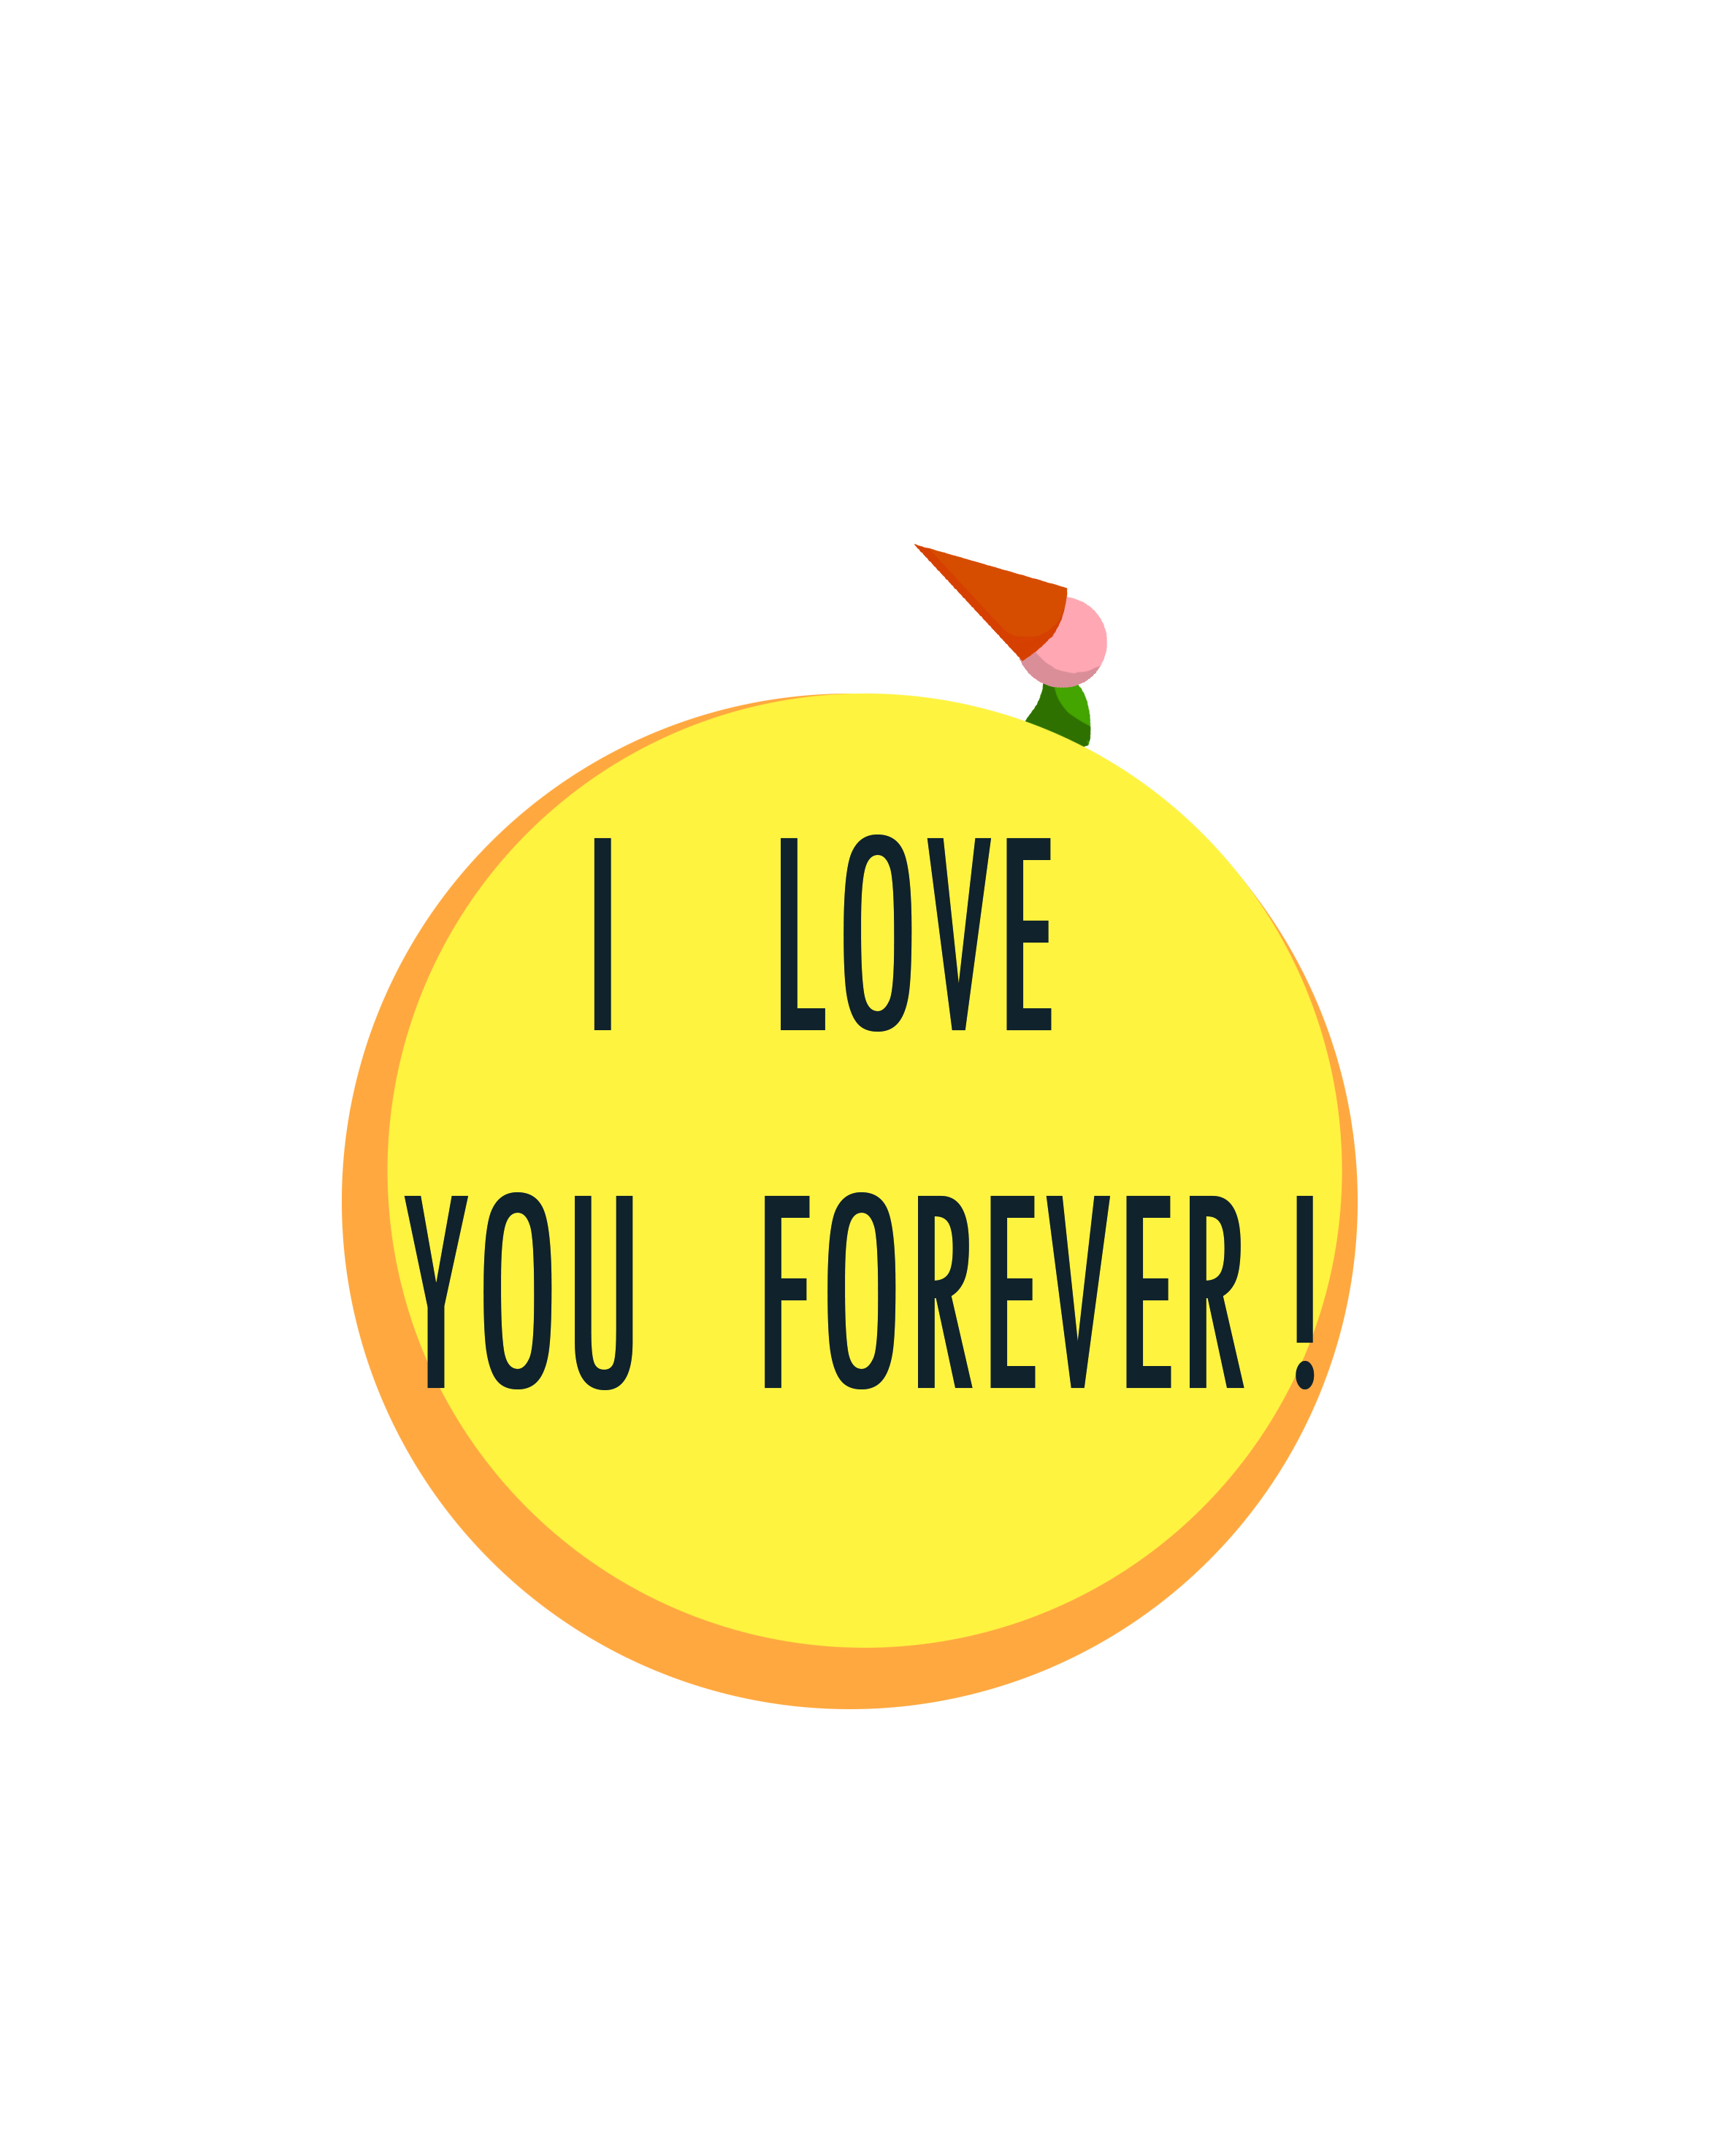 I LOVE YOU FOREVER